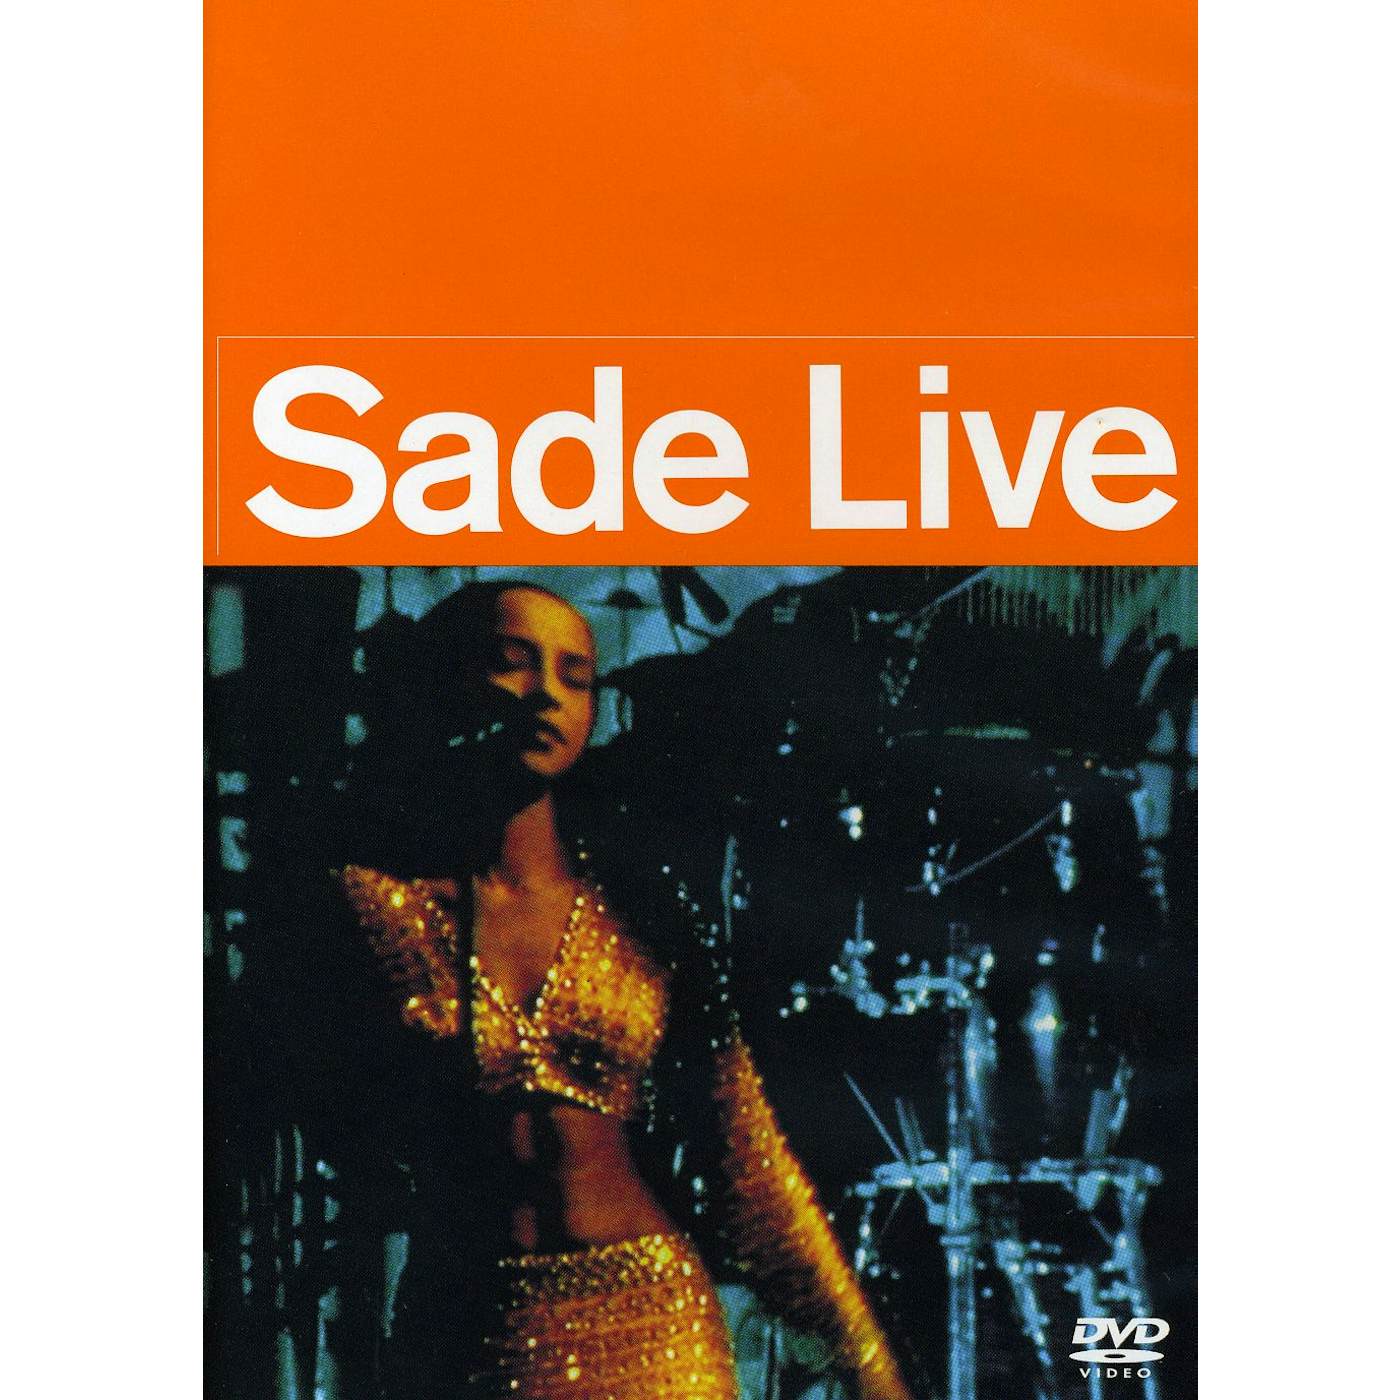 SADE LIVE DVD